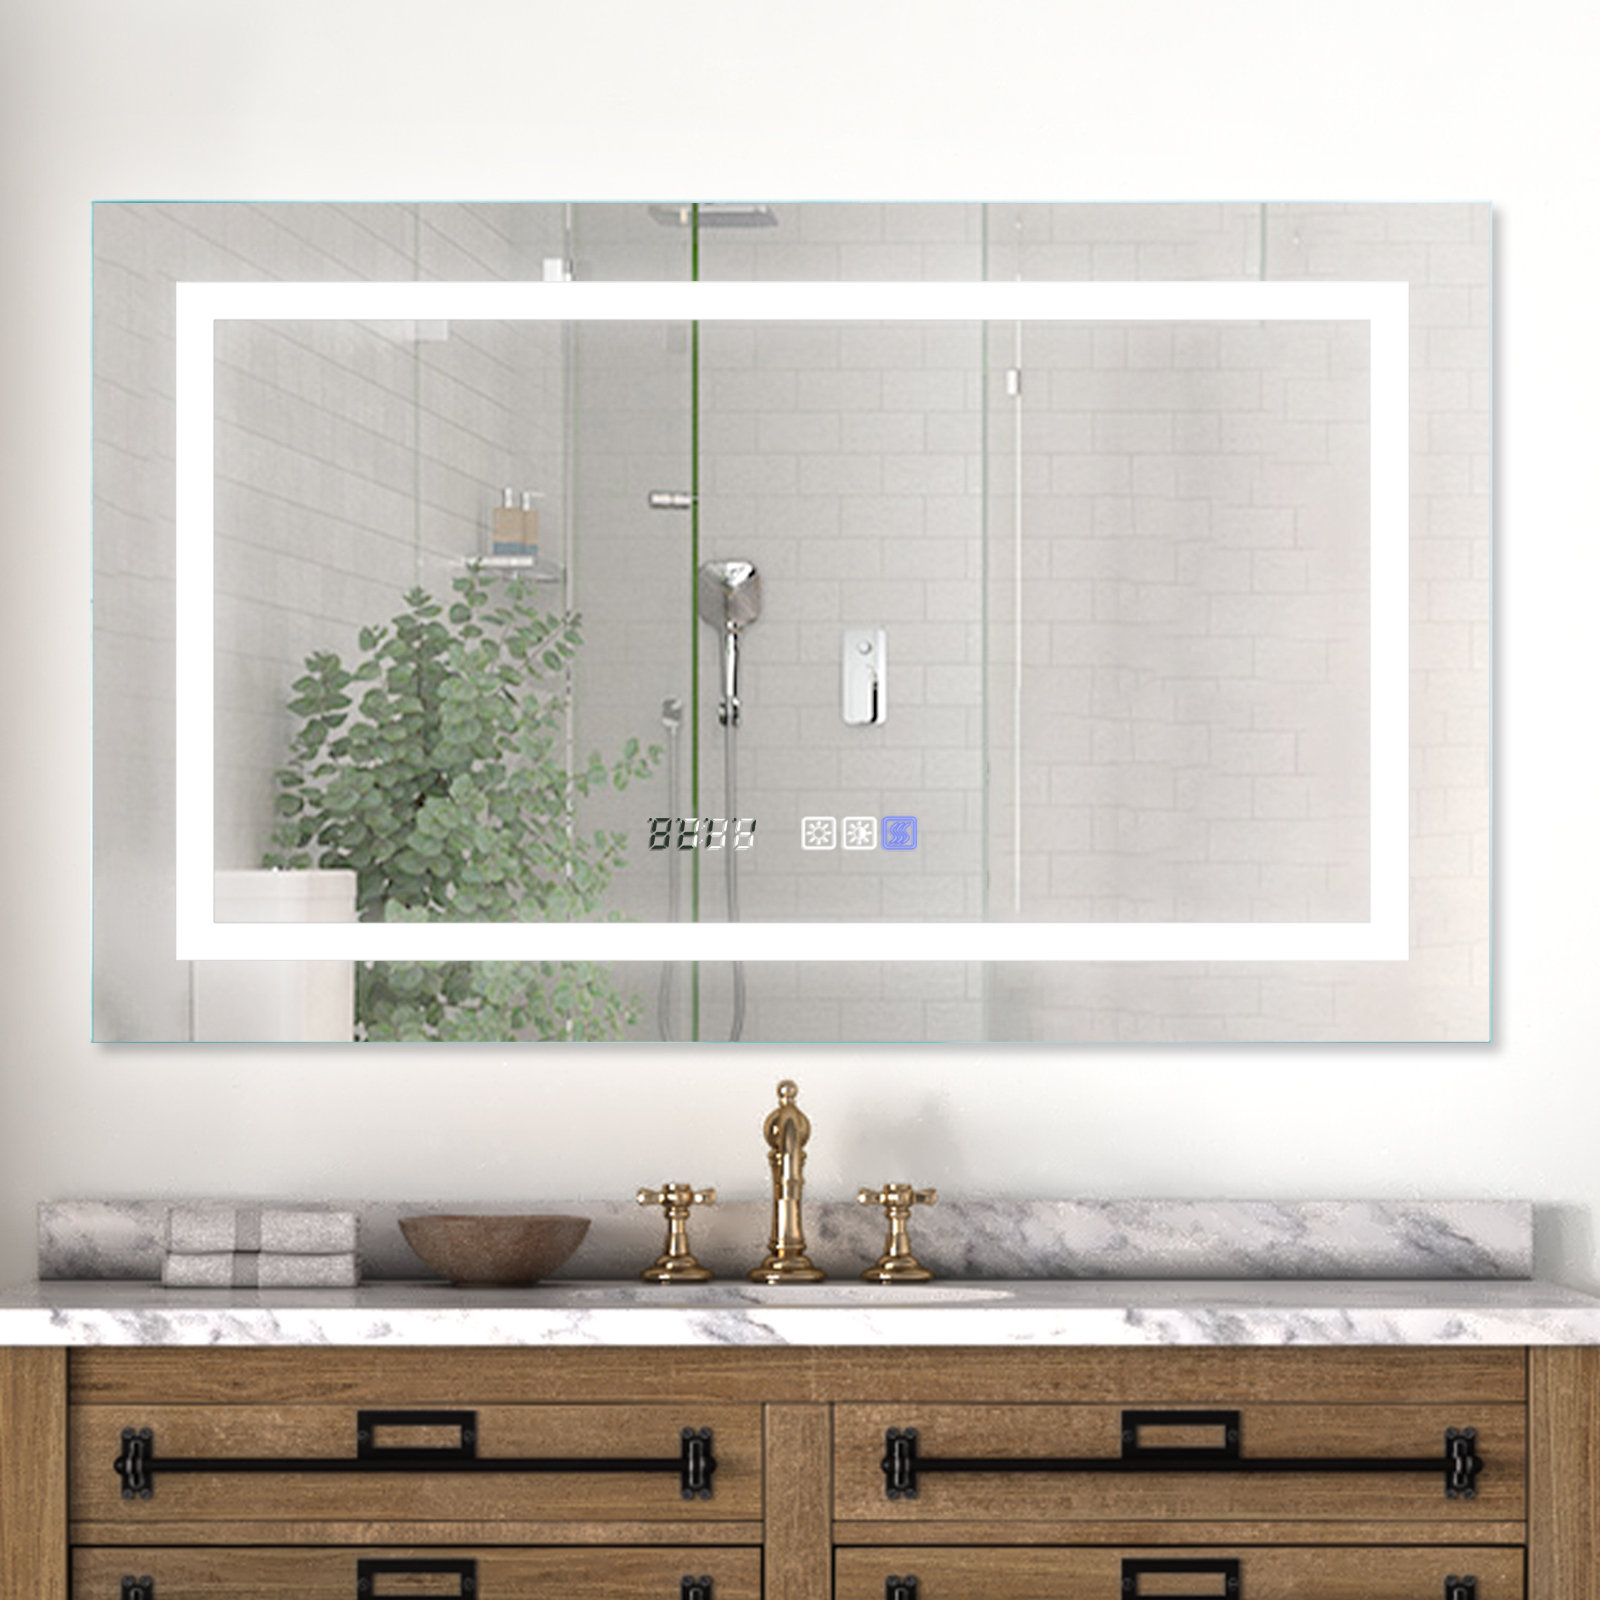 LED Black Framed Bathroom Vanity Mirror, Illuminated Dimmable Anti Fog Makeup Mirror, 3 Color Light Orren Ellis Size: 36 x 24